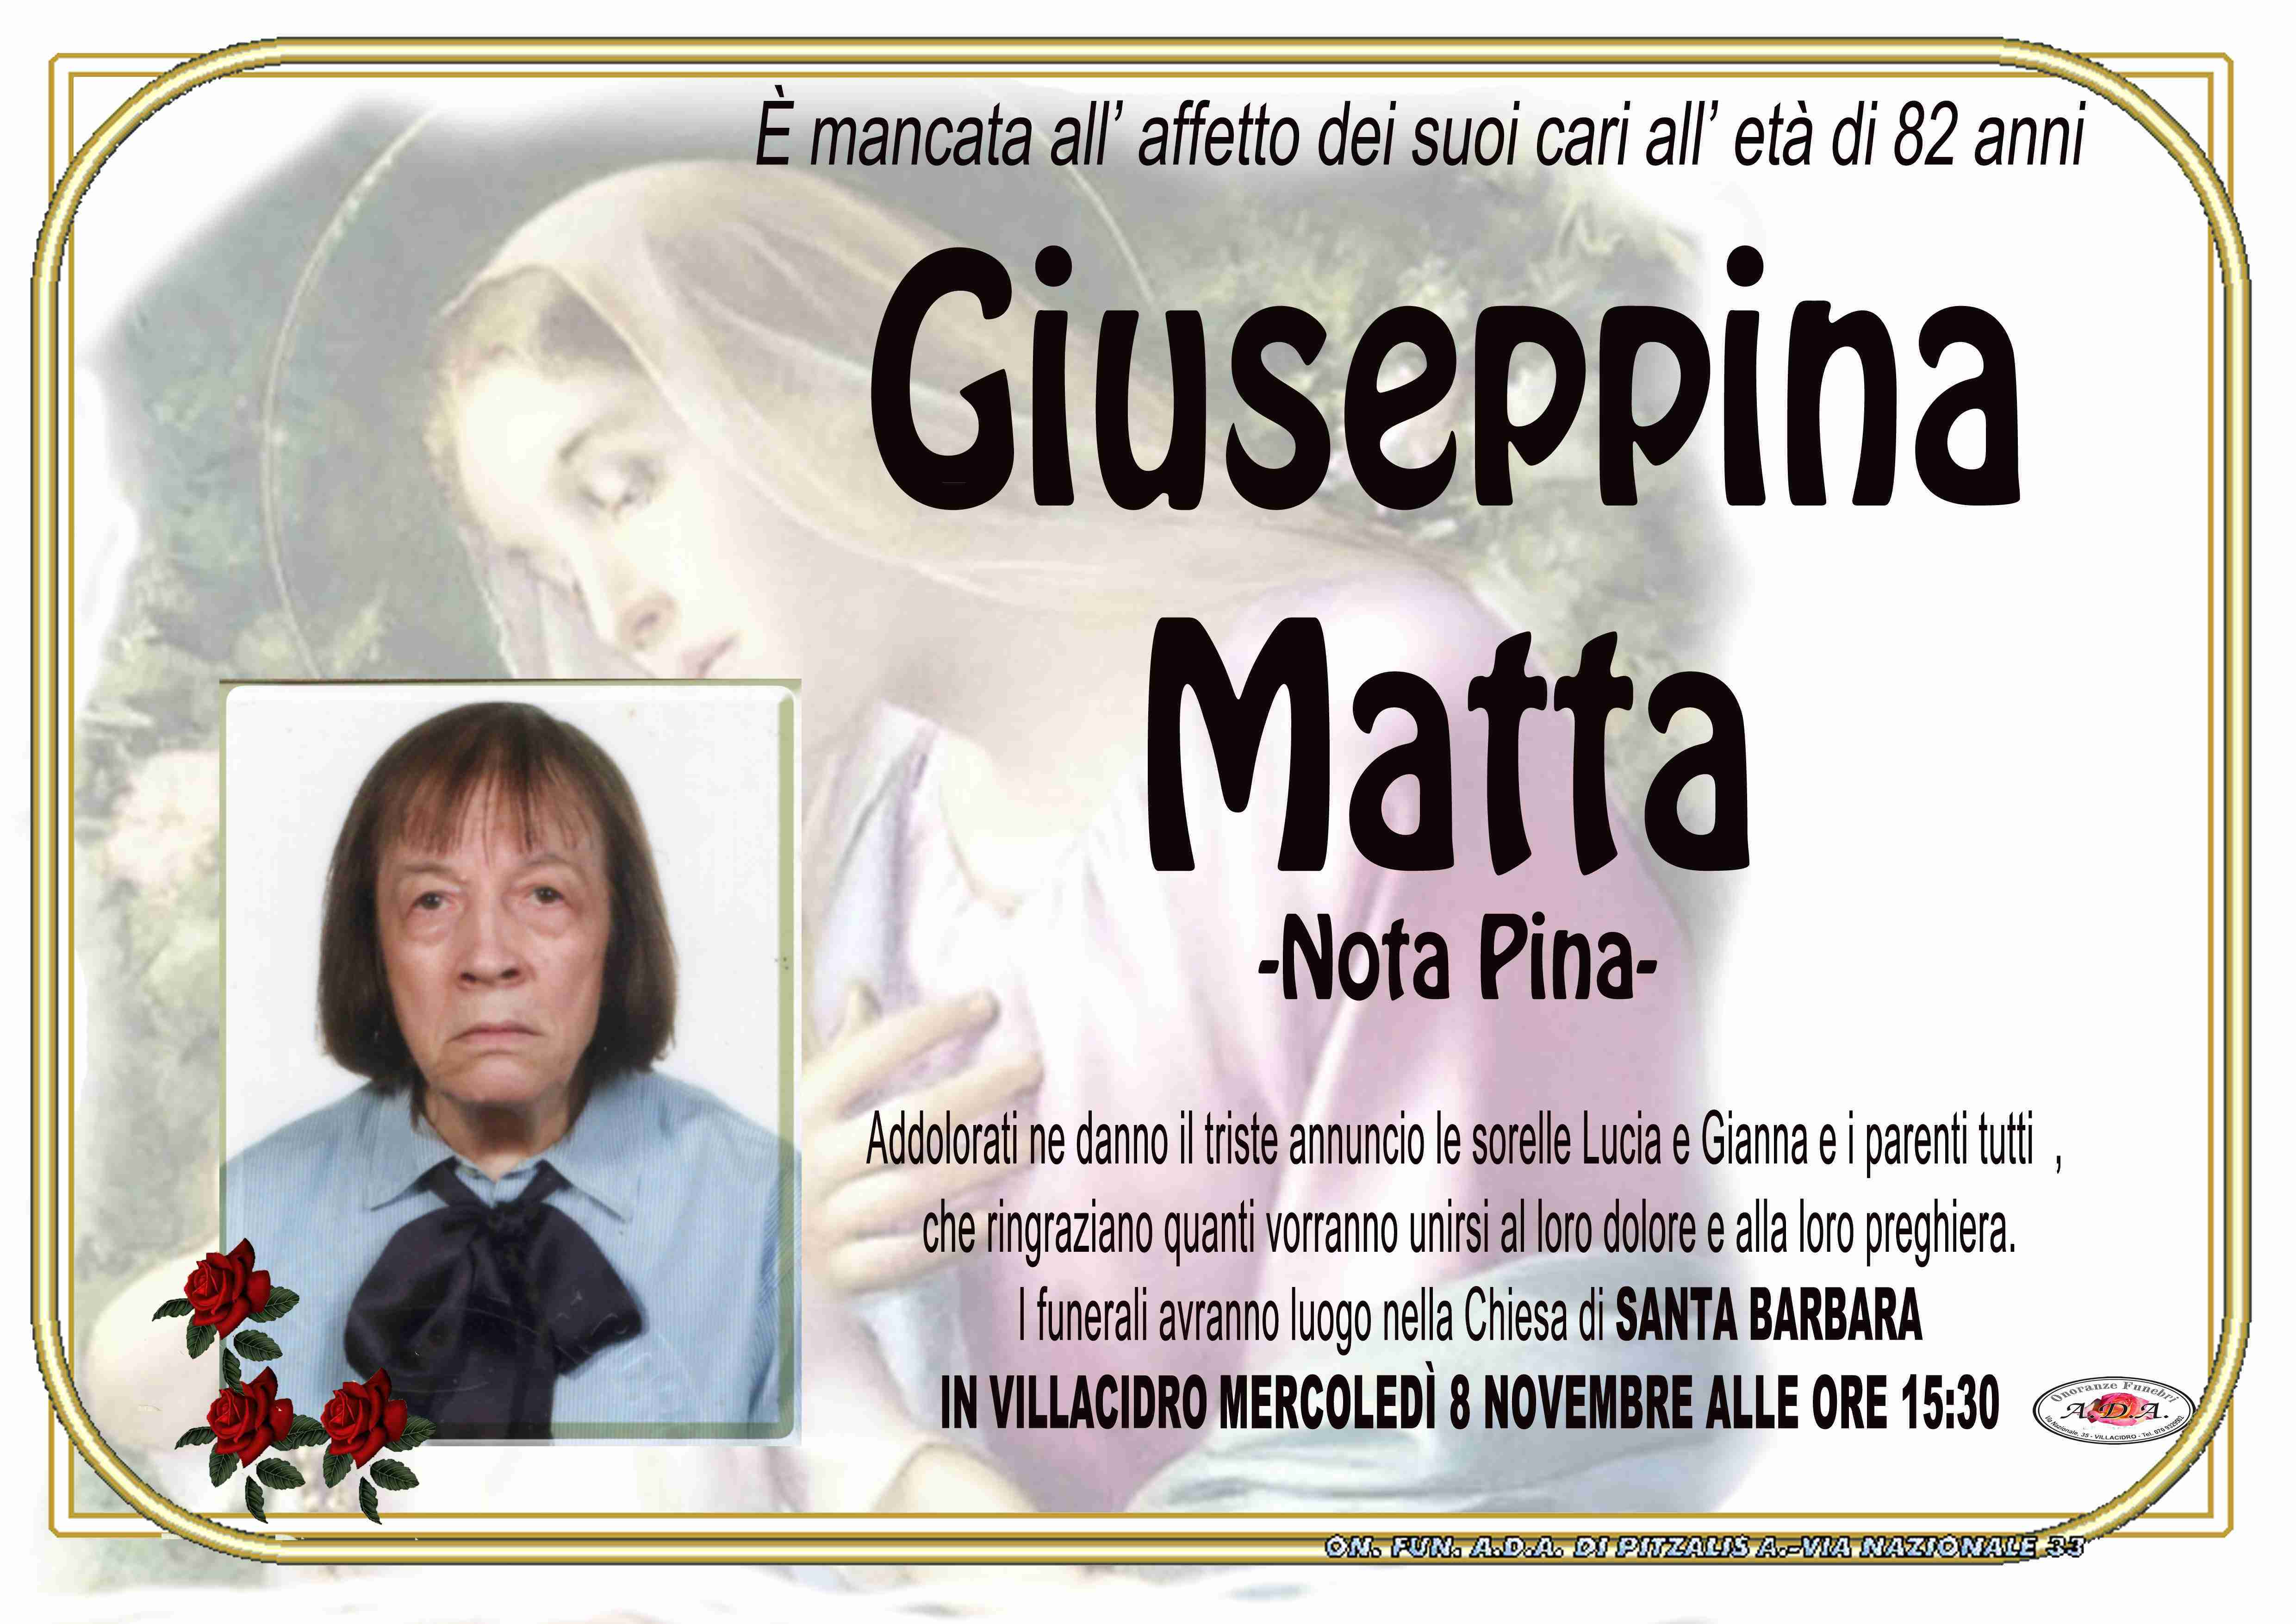 Giuseppina Matta